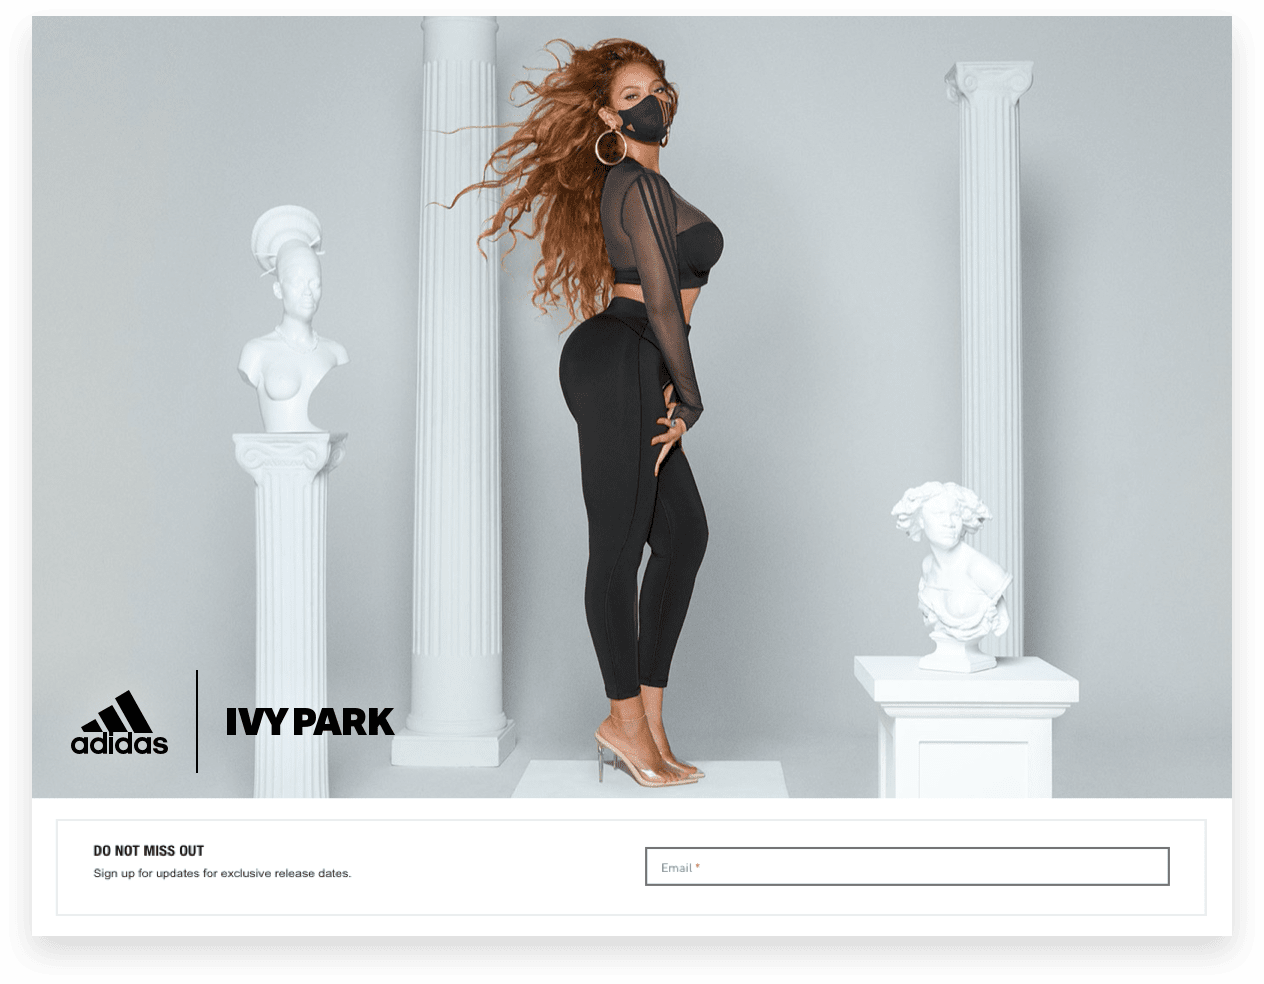 Adidas x Ivy Park fashion marketing campaign